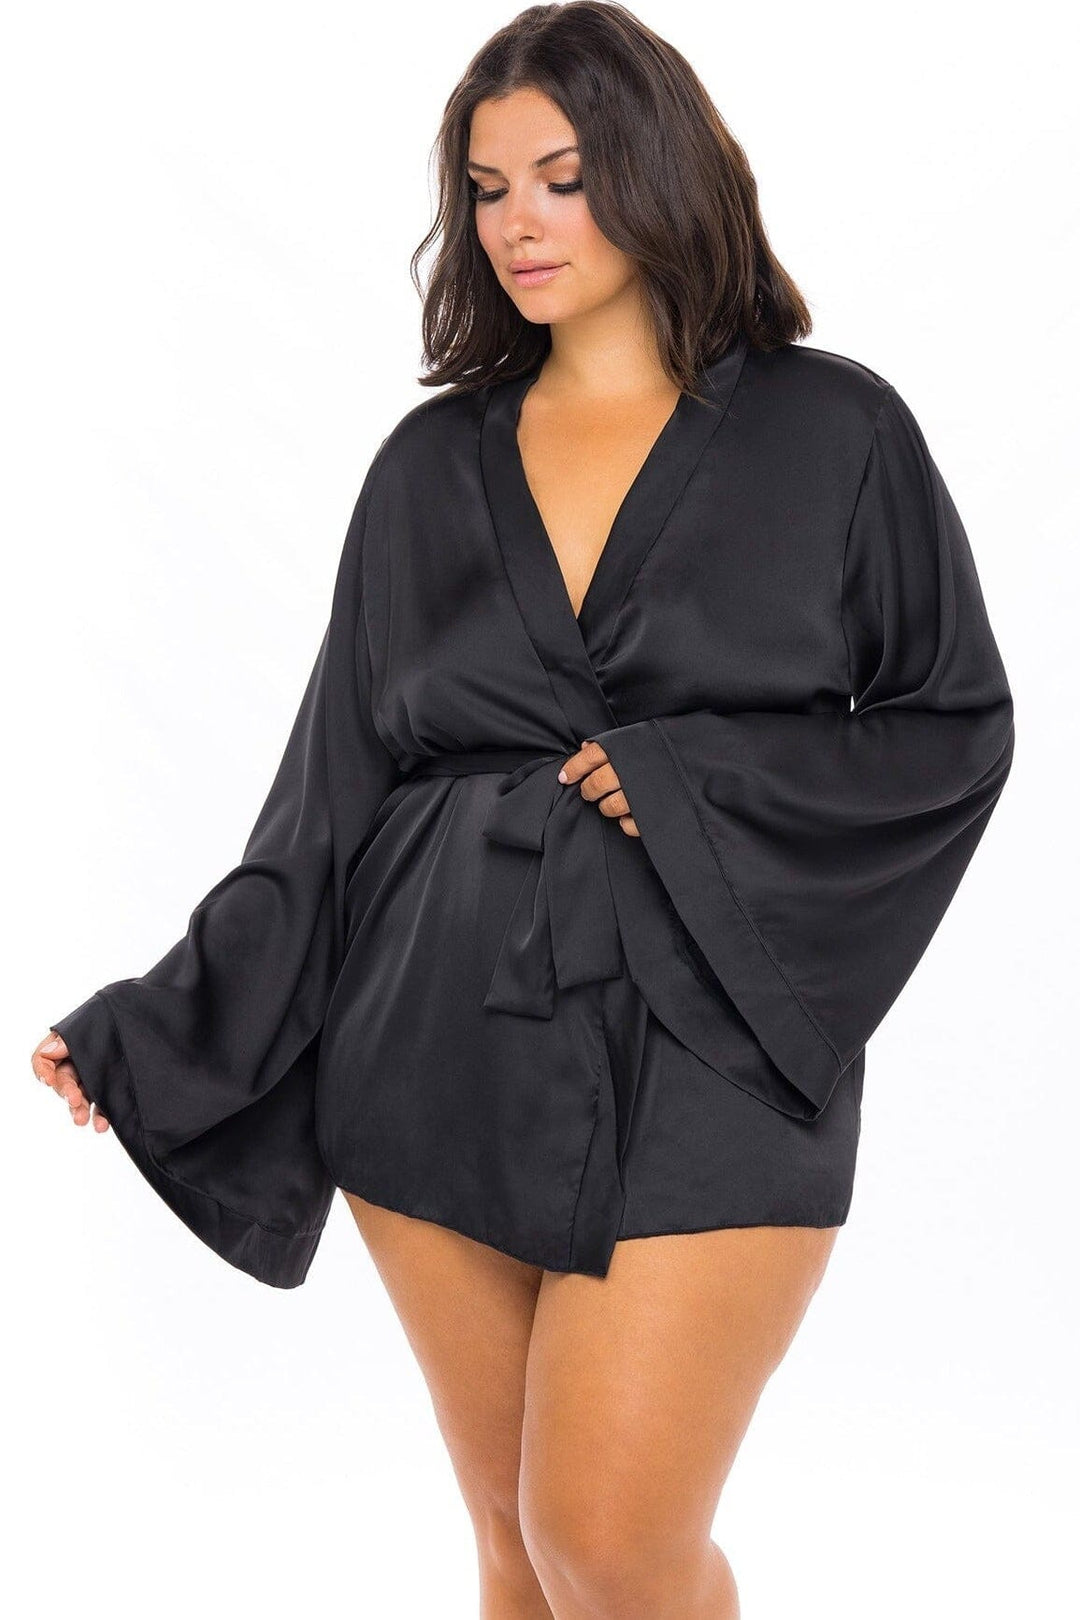 Short Wide Sleeved Robe-Gowns + Robes-Oh La La Cheri-Black-1X/2XL-SEXYSHOES.COM